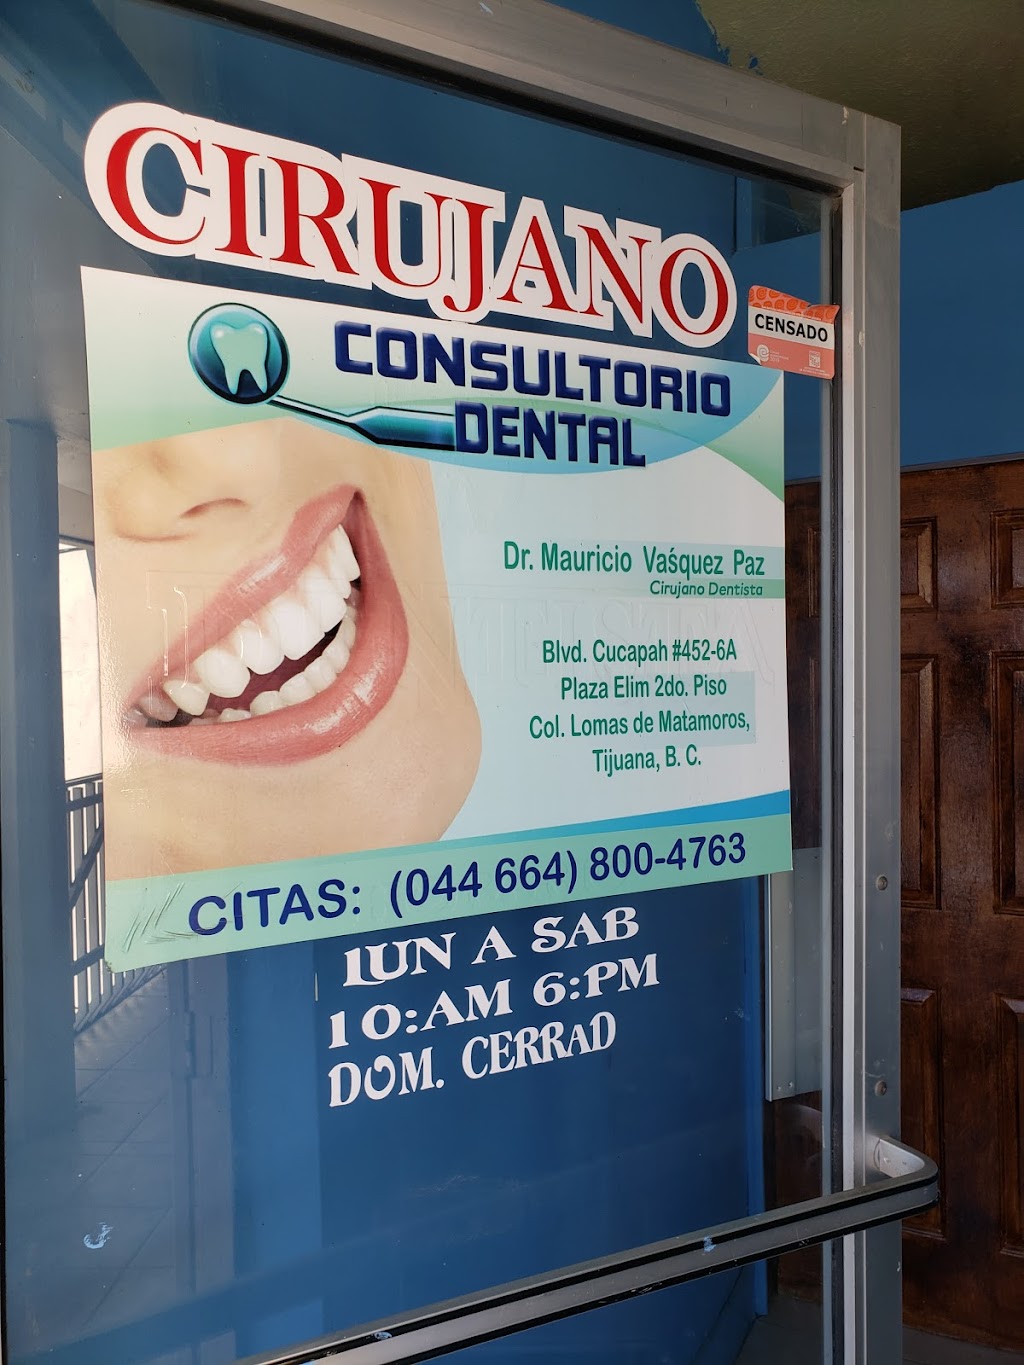 Consultorio Dental - Dr. Mauricio Vázquez Paz | Granjas Familiares del Matamoros, 22203 Tijuana, B.C., Mexico | Phone: 664 800 4763